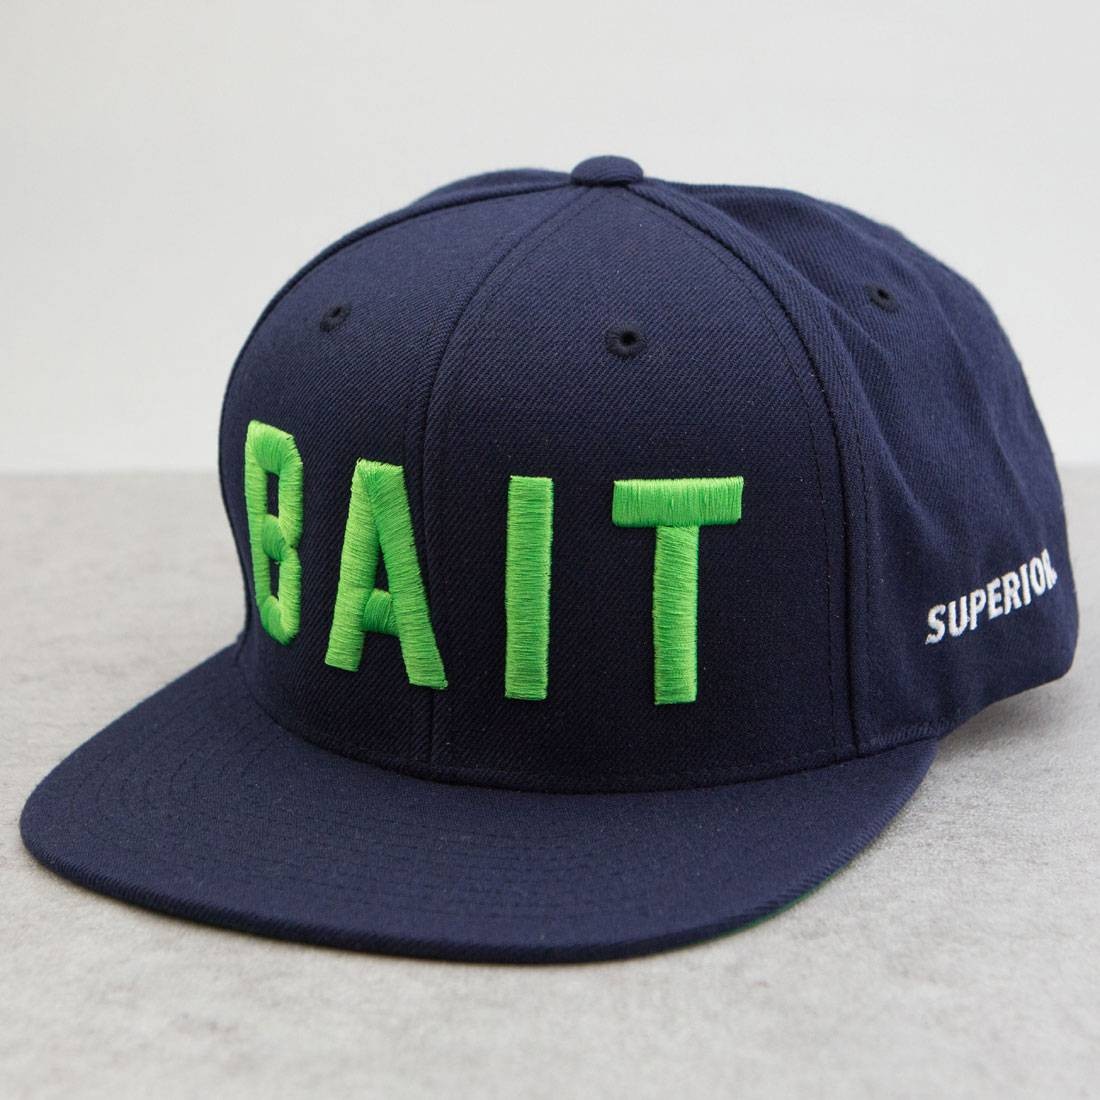 BAIT x Starter Logo Snapback Cap (navy / green)